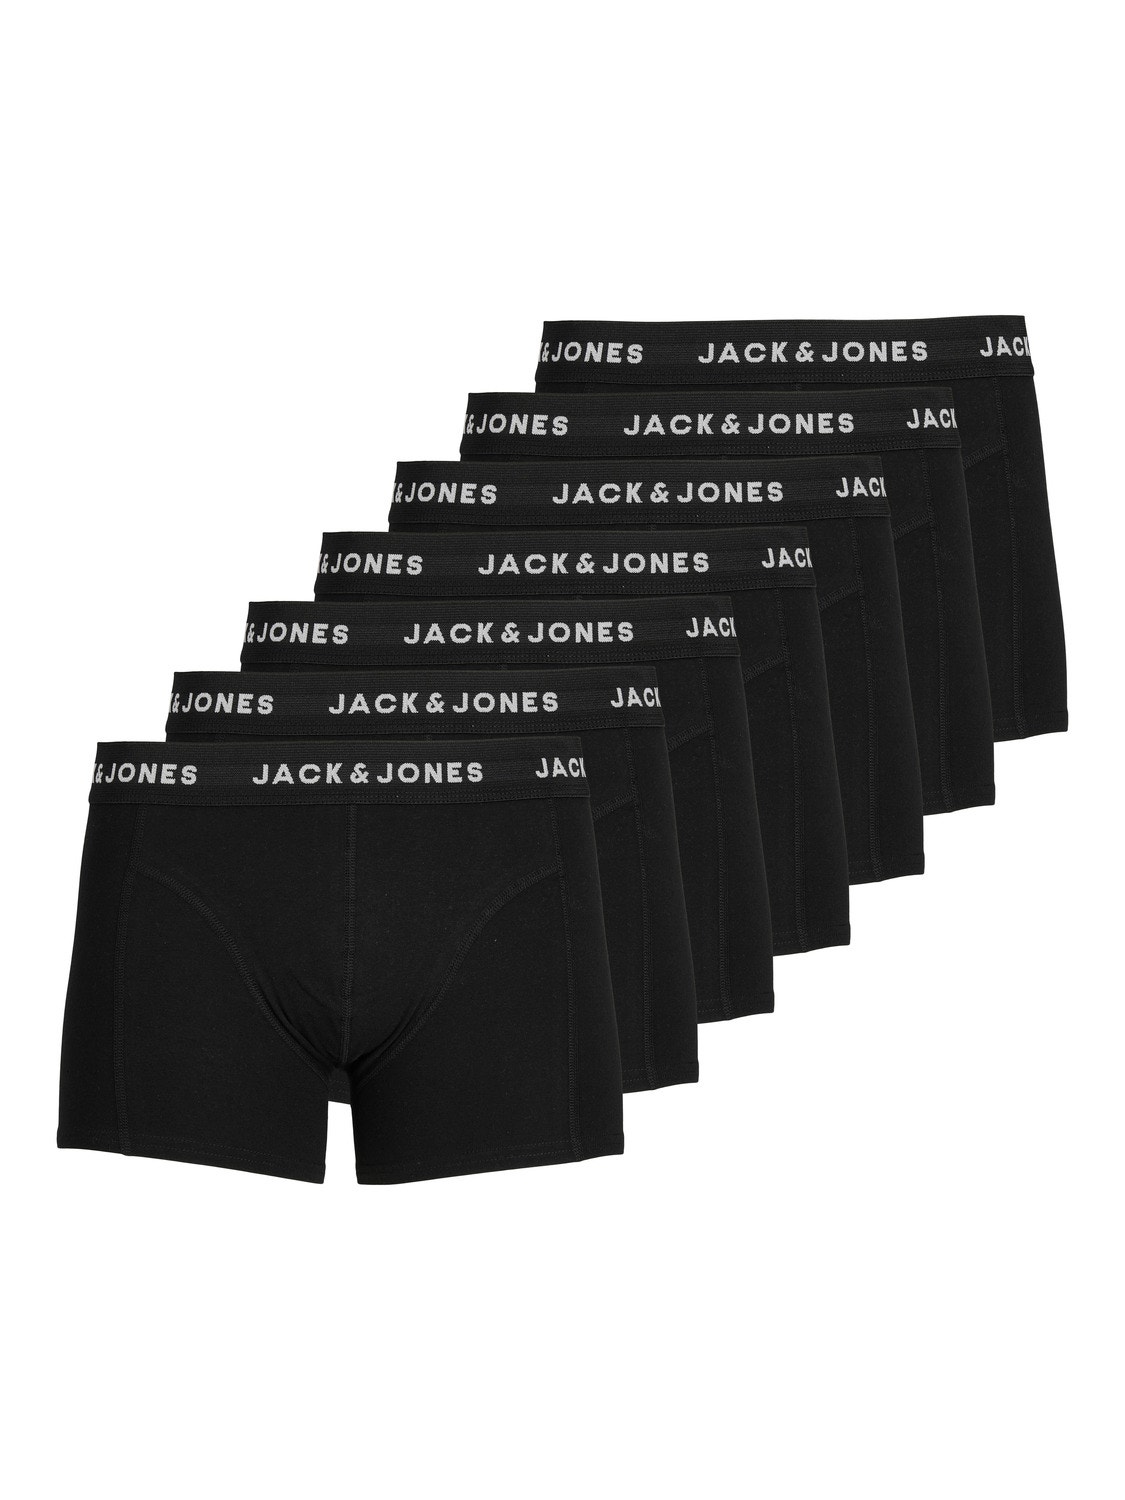 Jack & Jones 7 Trunks -Black - 12171258